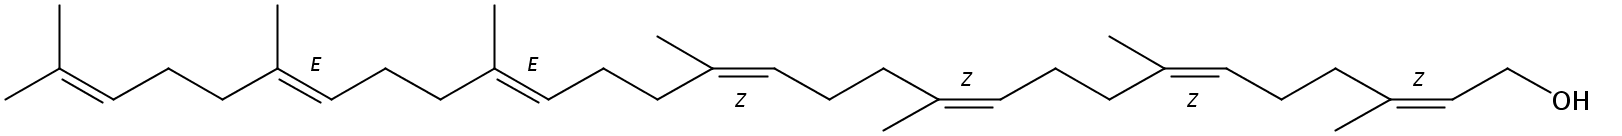 Structural formula of Heptaprenol